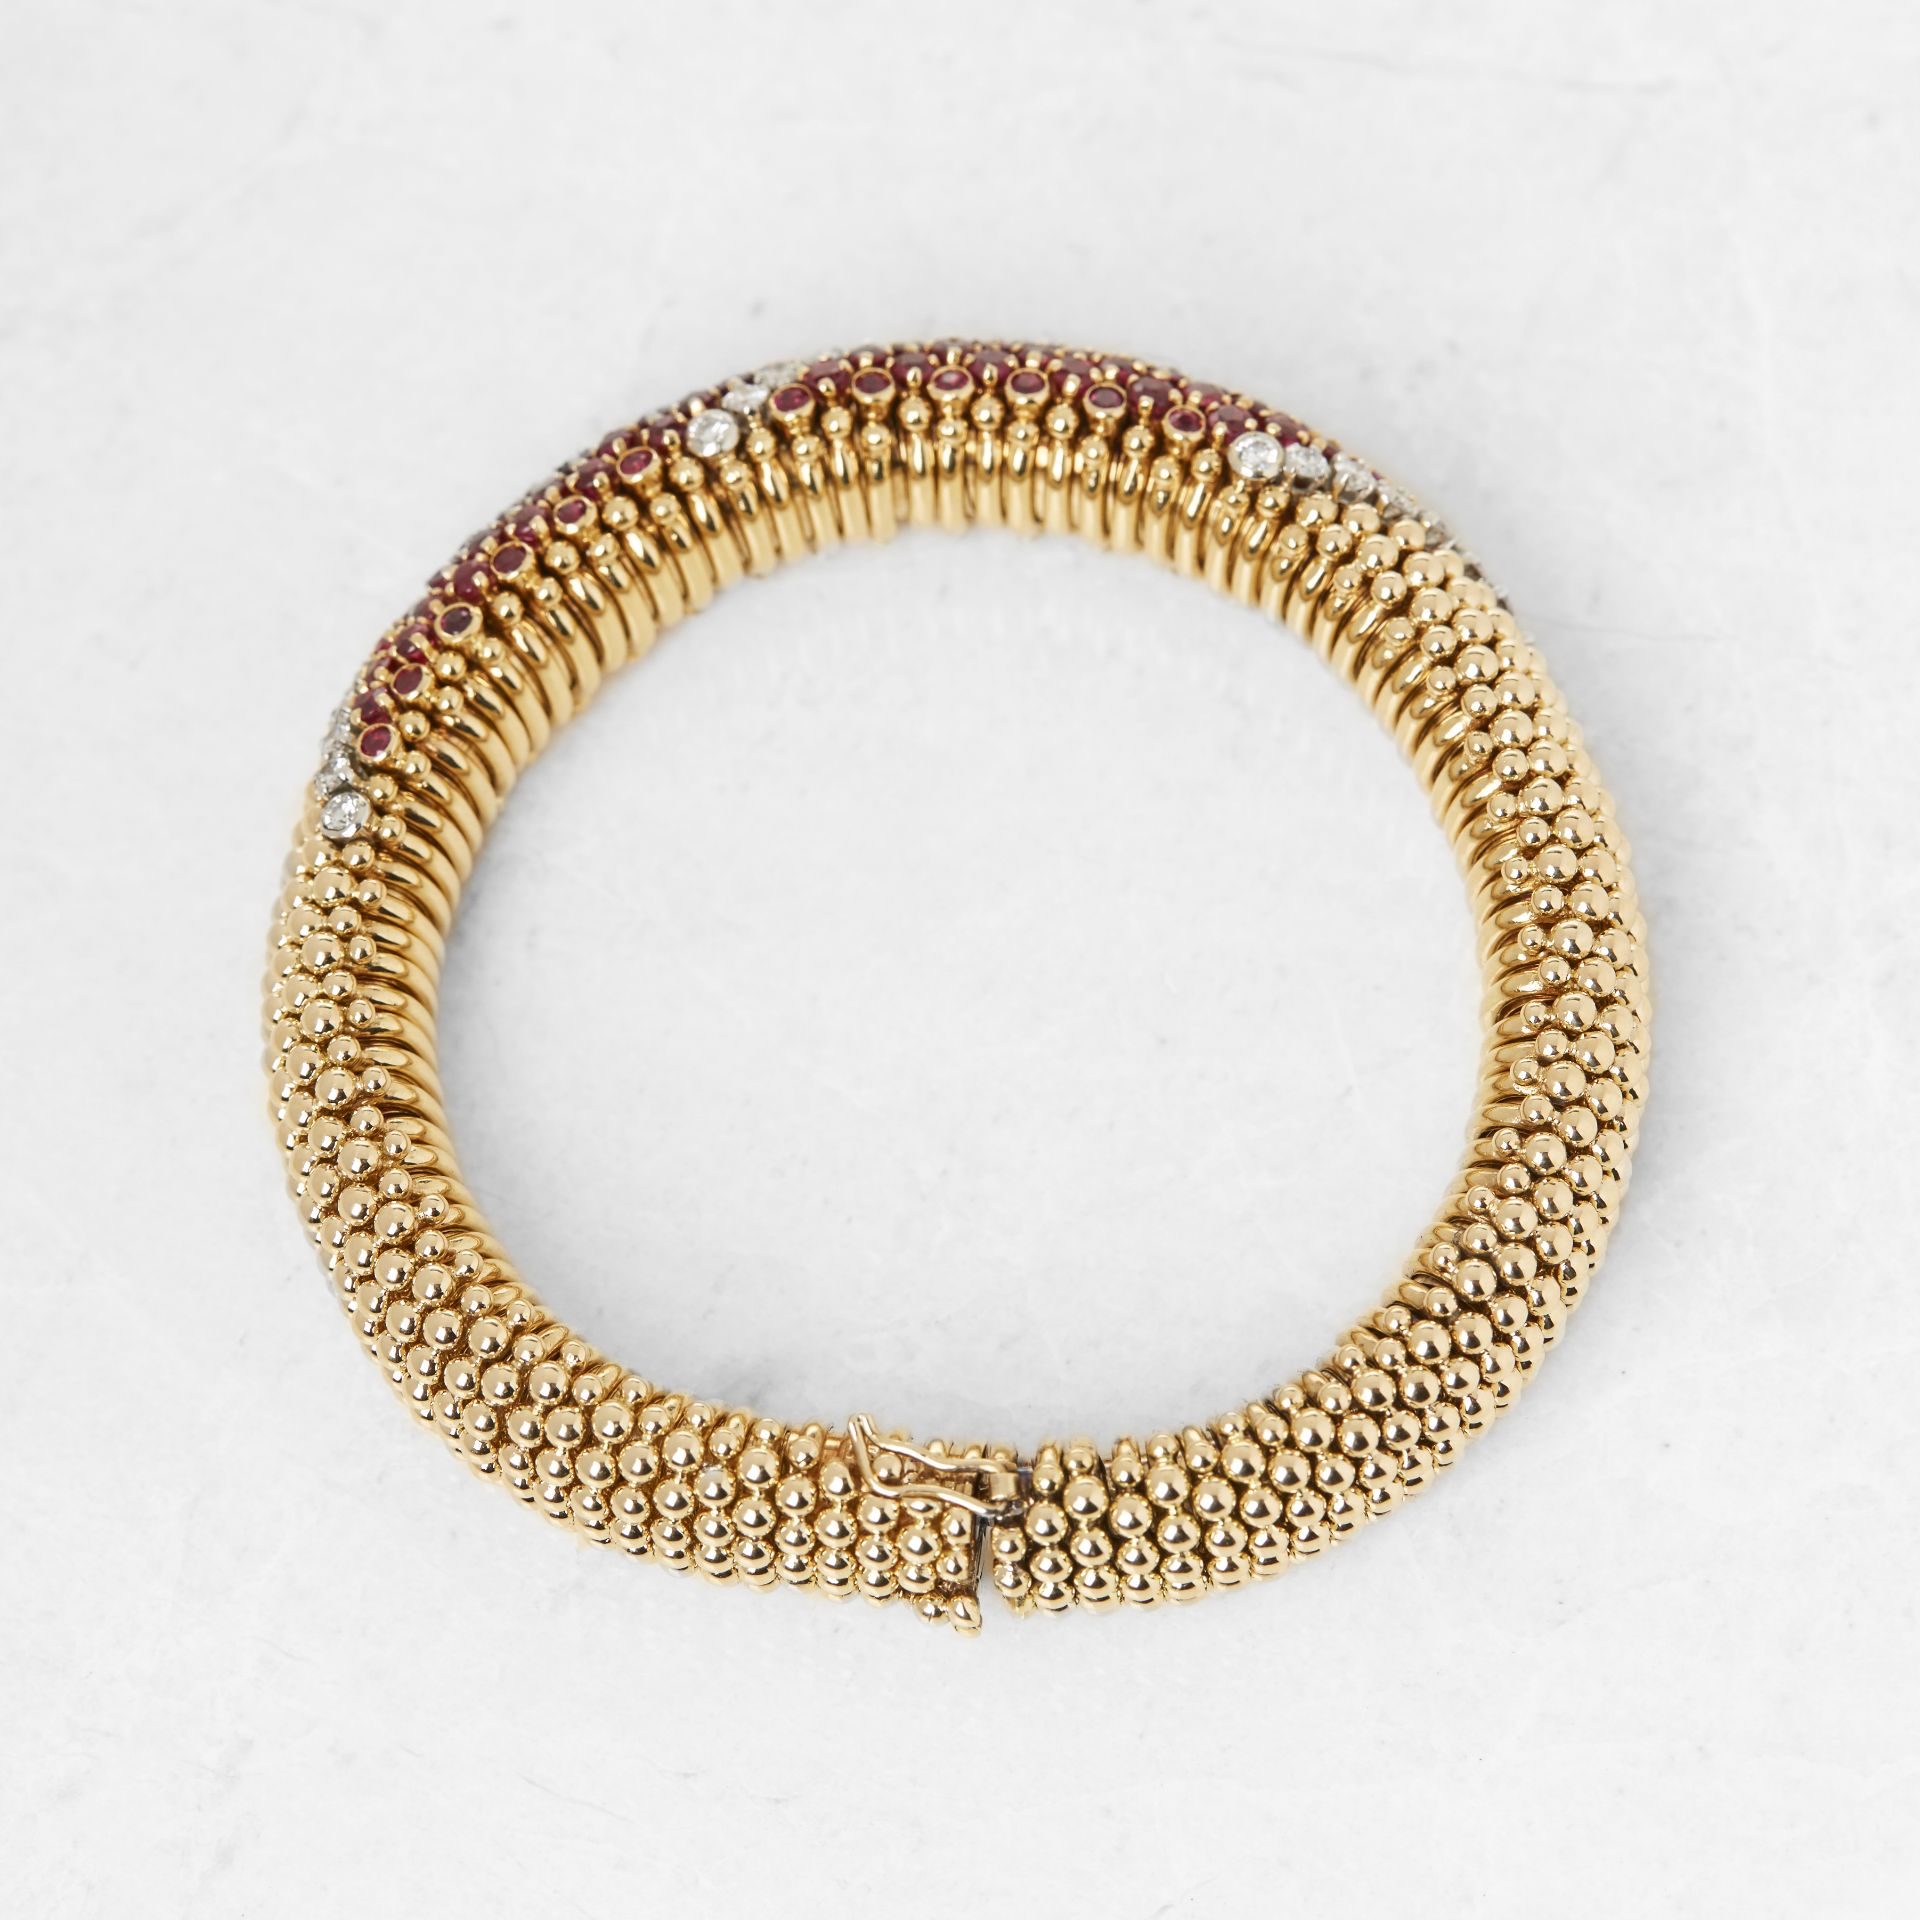 Van Cleef & Arpels 18k Yellow Gold Ruby & Diamond Vintage Bracelet with Presentation Box - Image 13 of 16